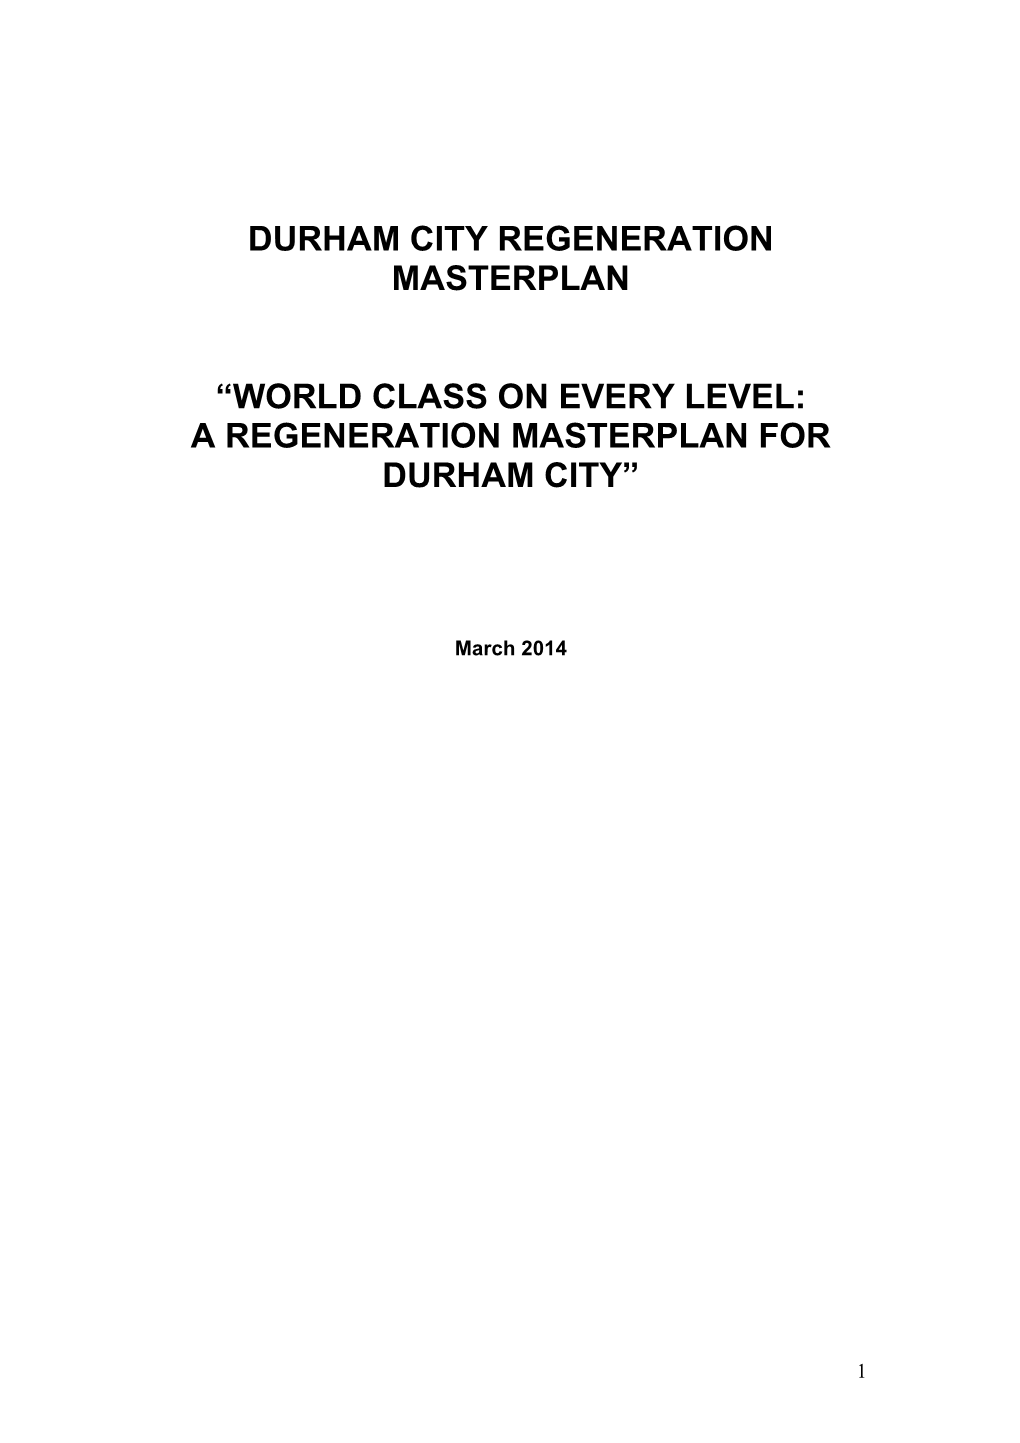 Durham City Regeneration Masterplan “World Class on Every Level: A